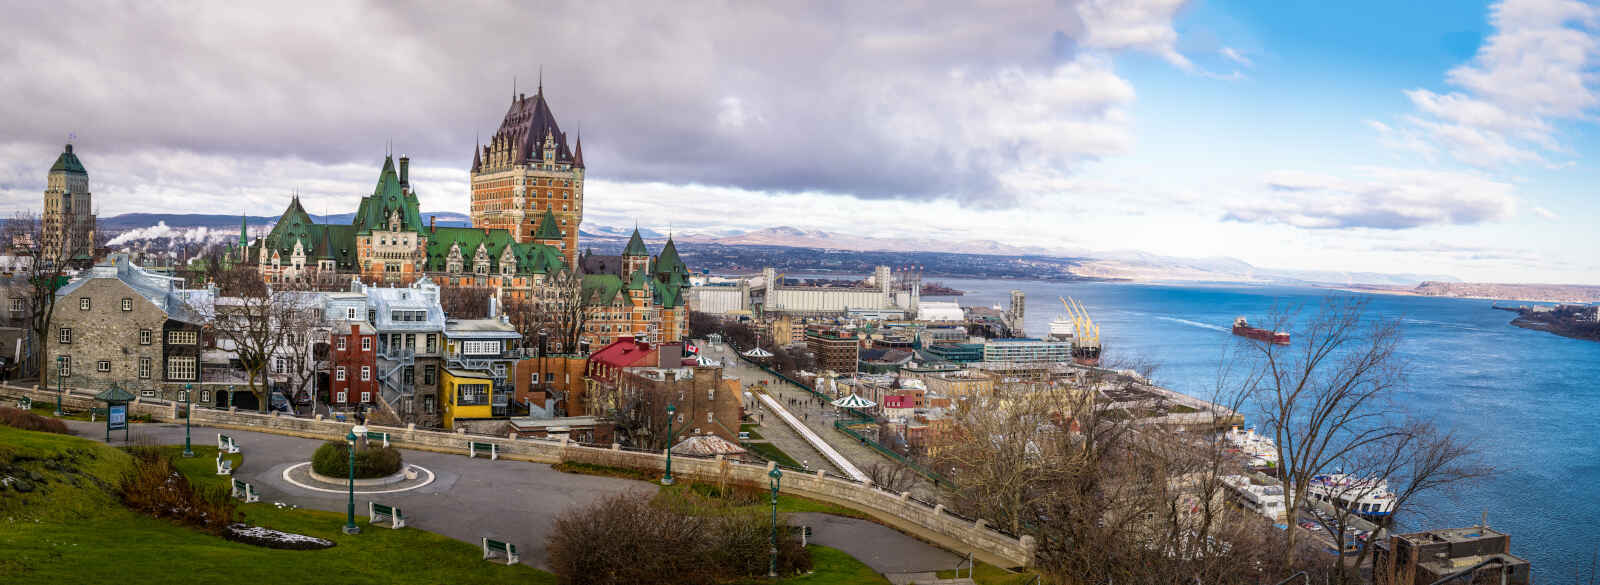 Château de Frontenac, Québec, Canada